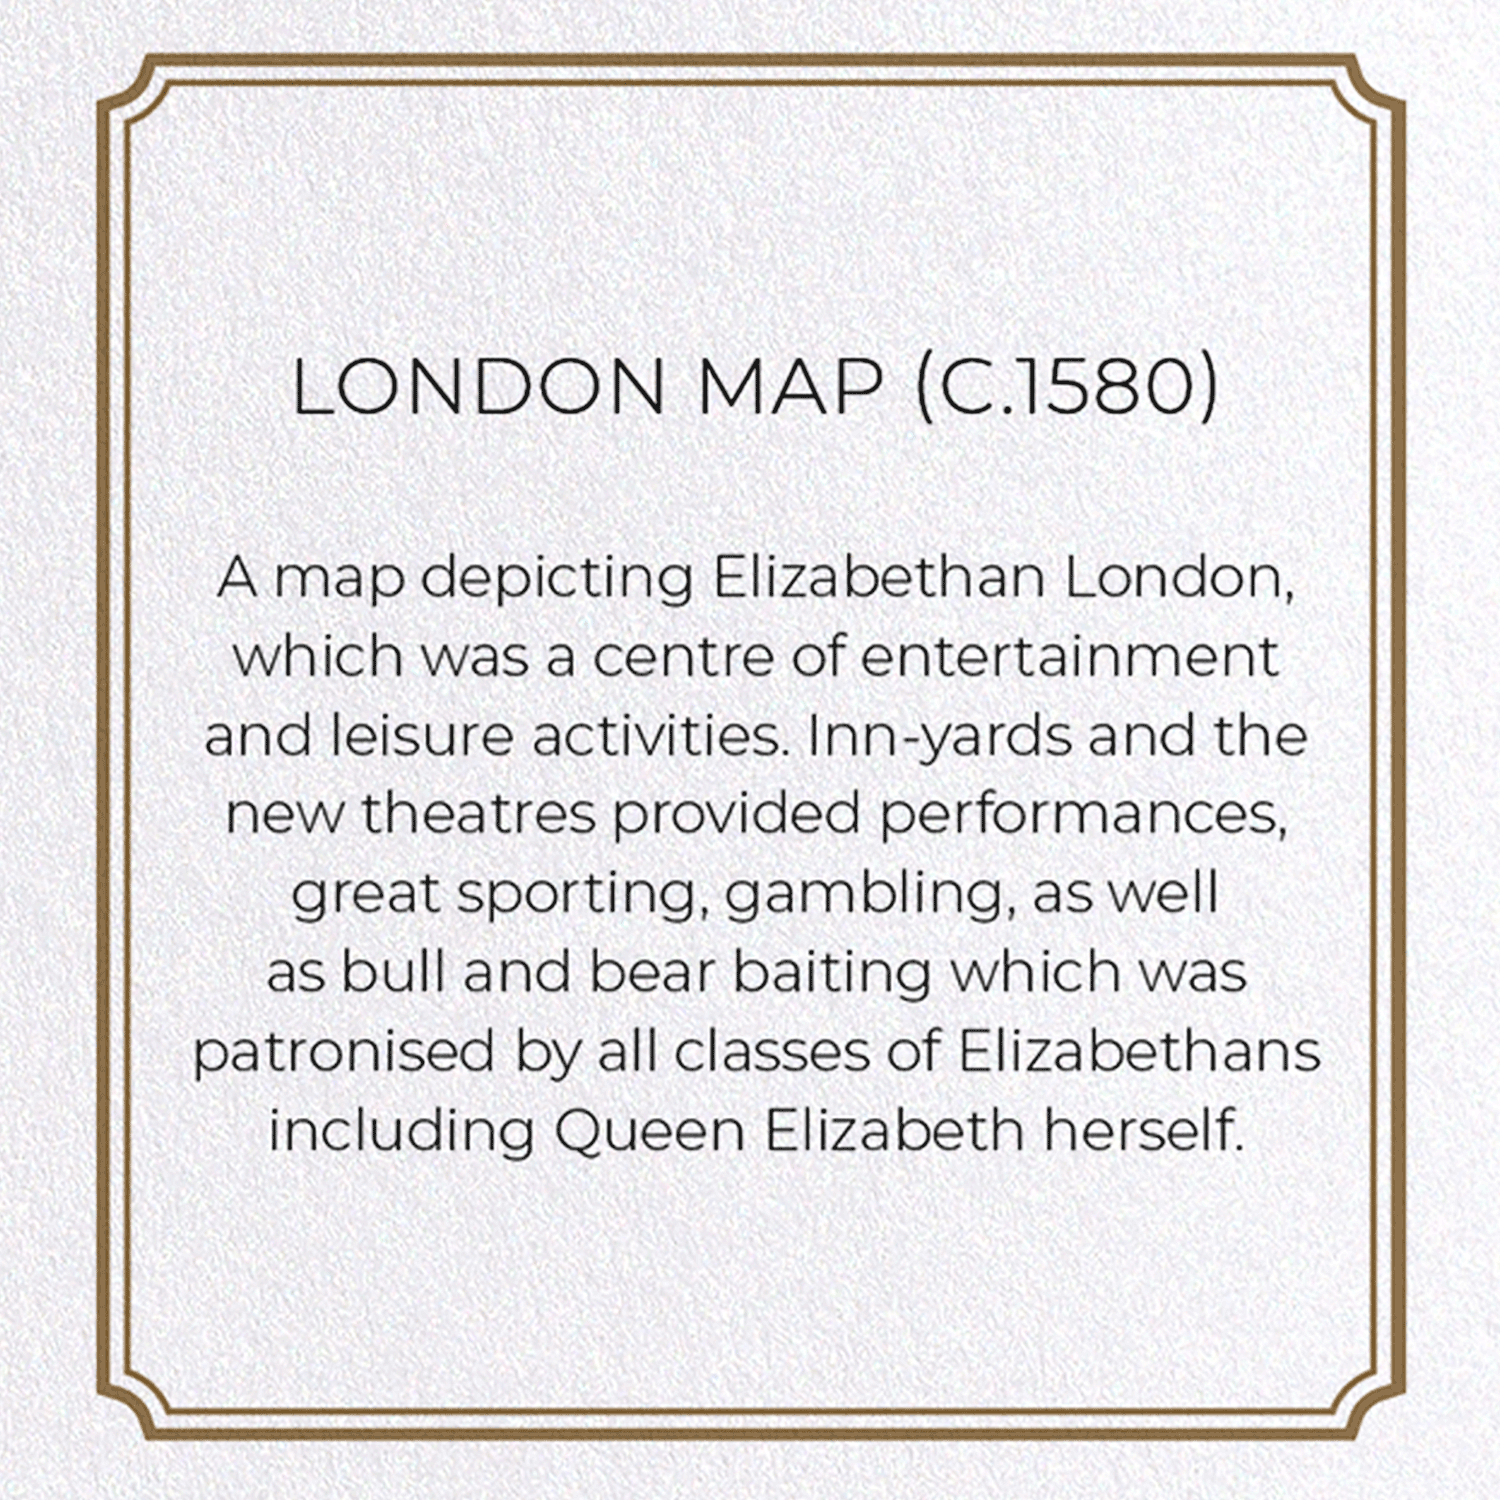 LONDON MAP (C.1580)